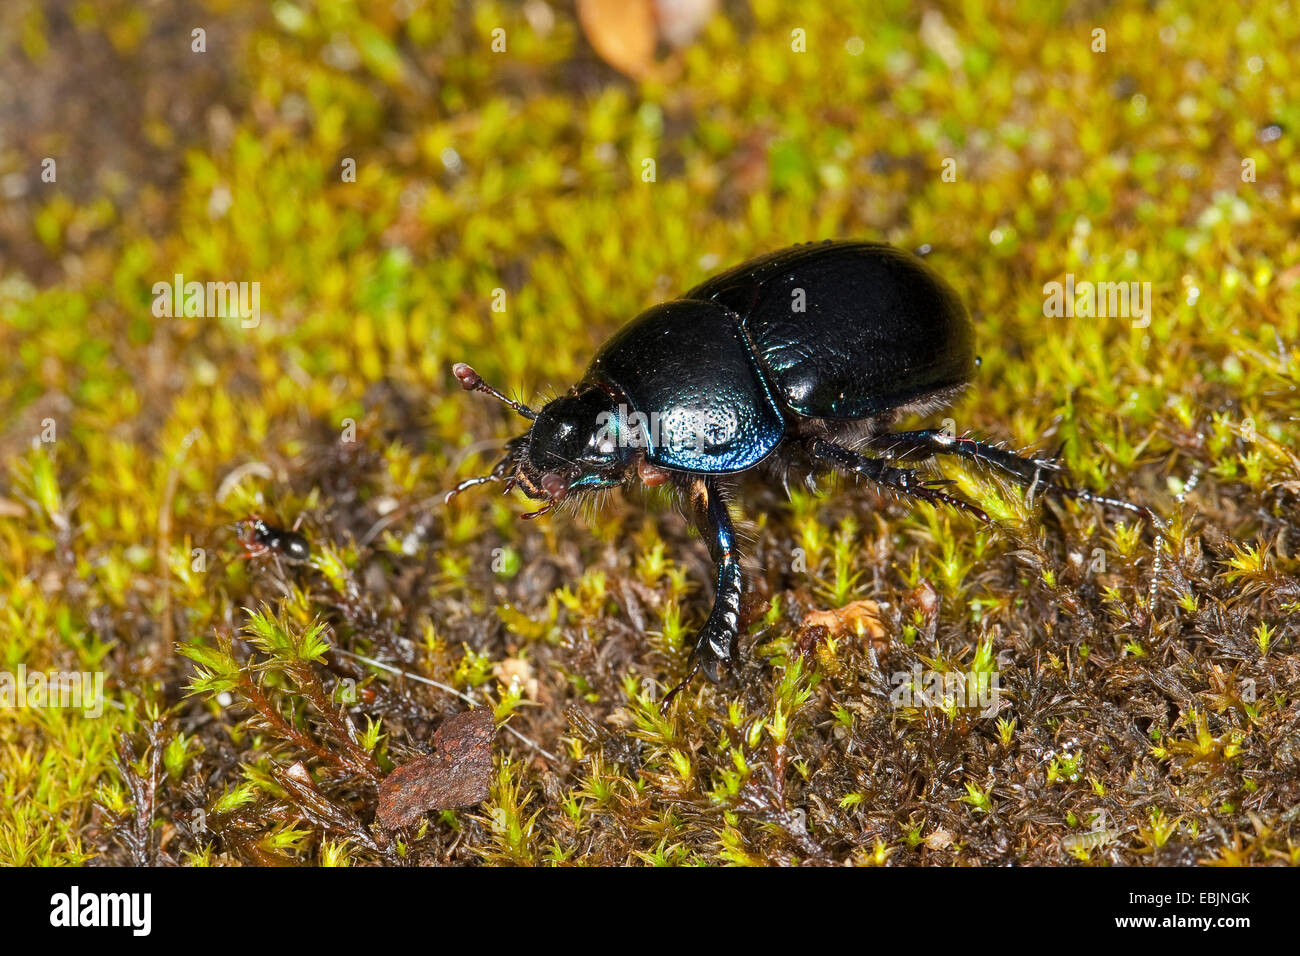 Common dor beetle (Anoplotrupes stercorosus, Geotrupes stercorosus), sitting on moss, Germany Stock Photo